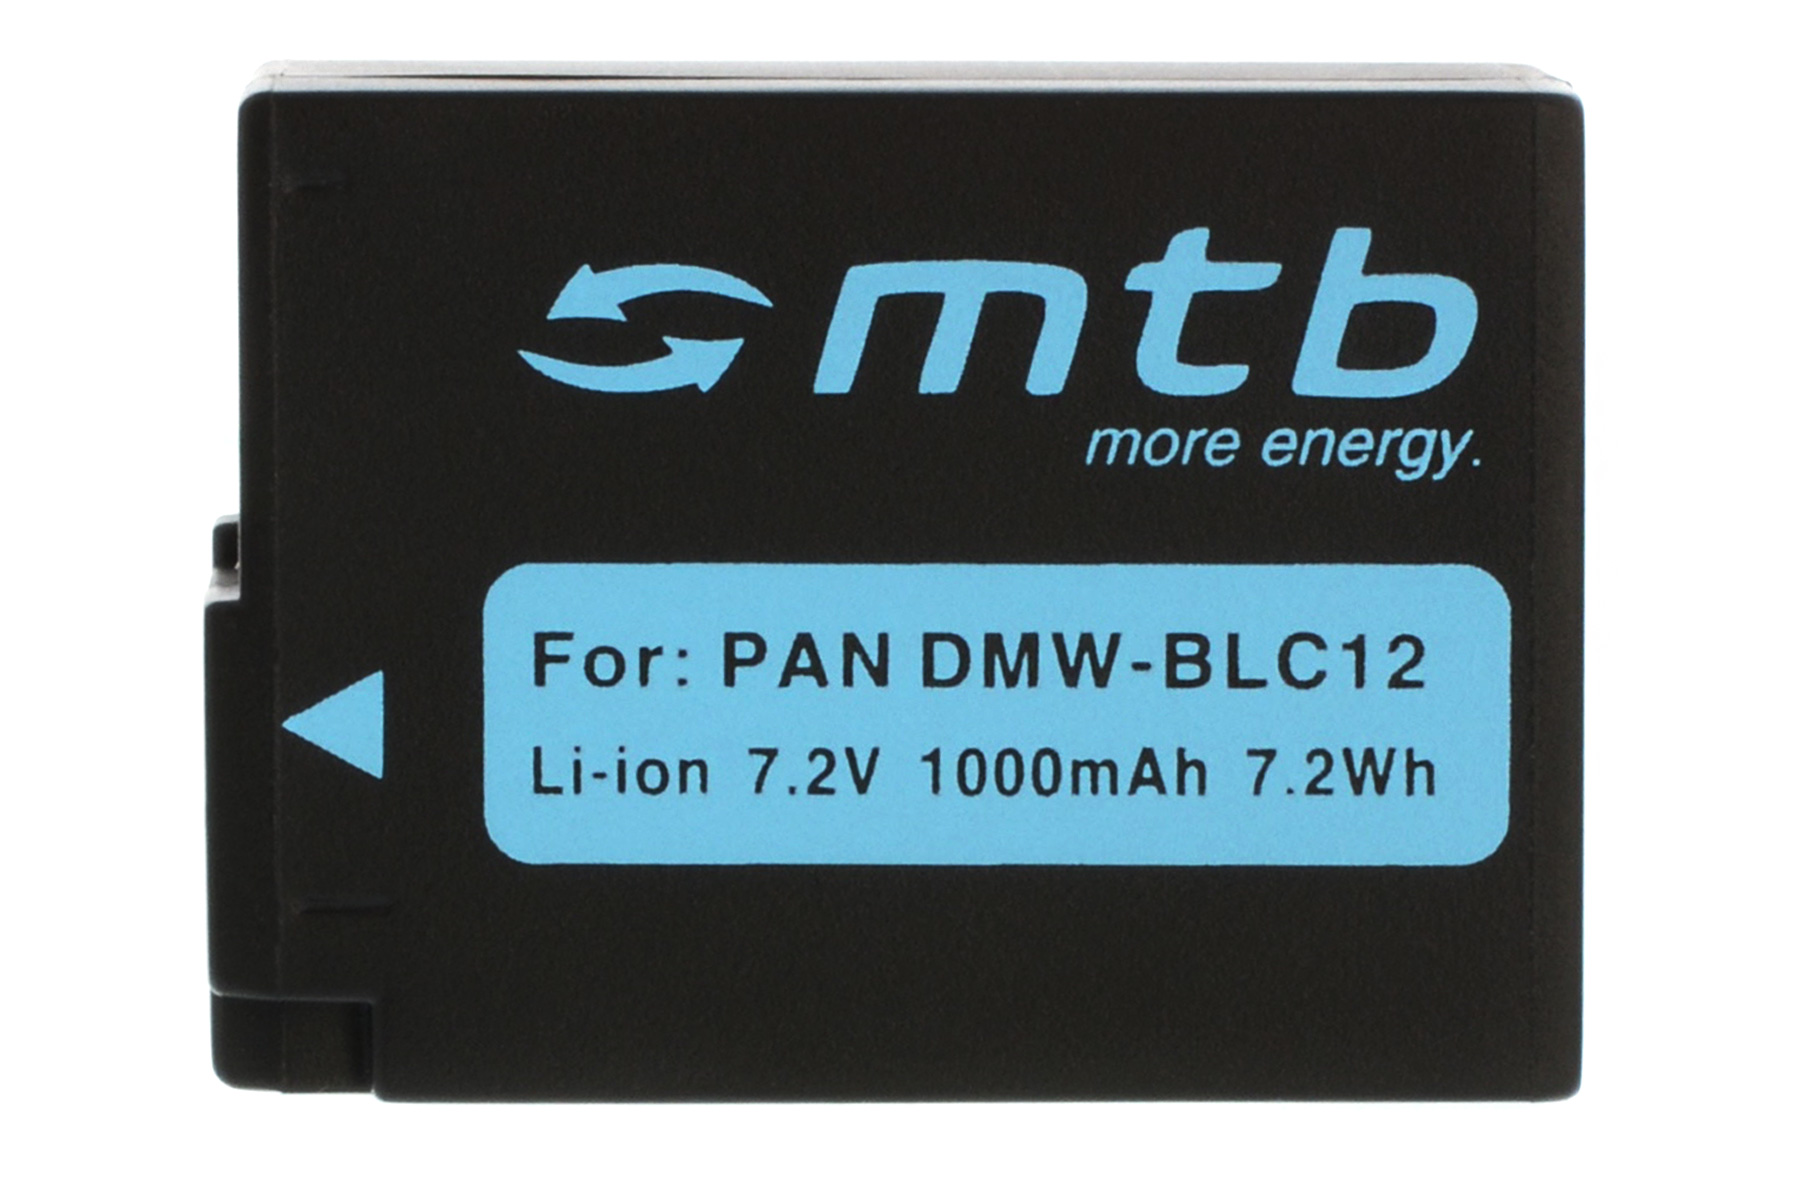 MTB MORE ENERGY 2x Akku, 1000 mAh BAT-262 Li-Ion, DMW-BLC12